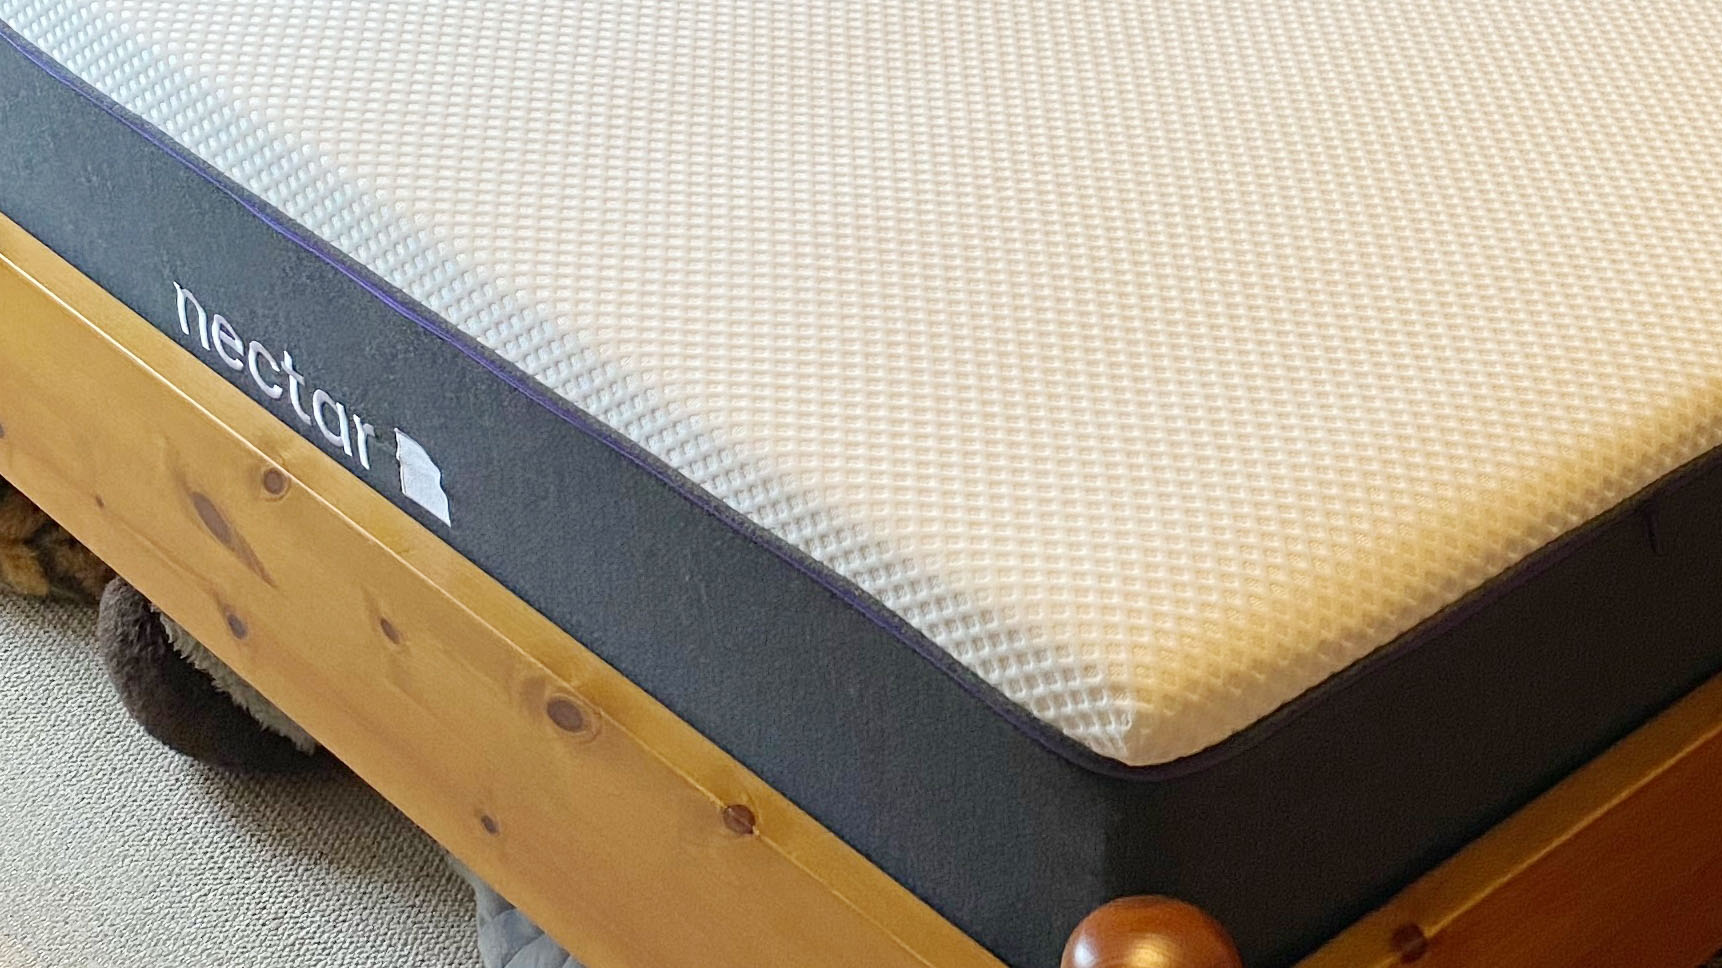 Close up of edge of Nectar Premier Hybrid mattress UK